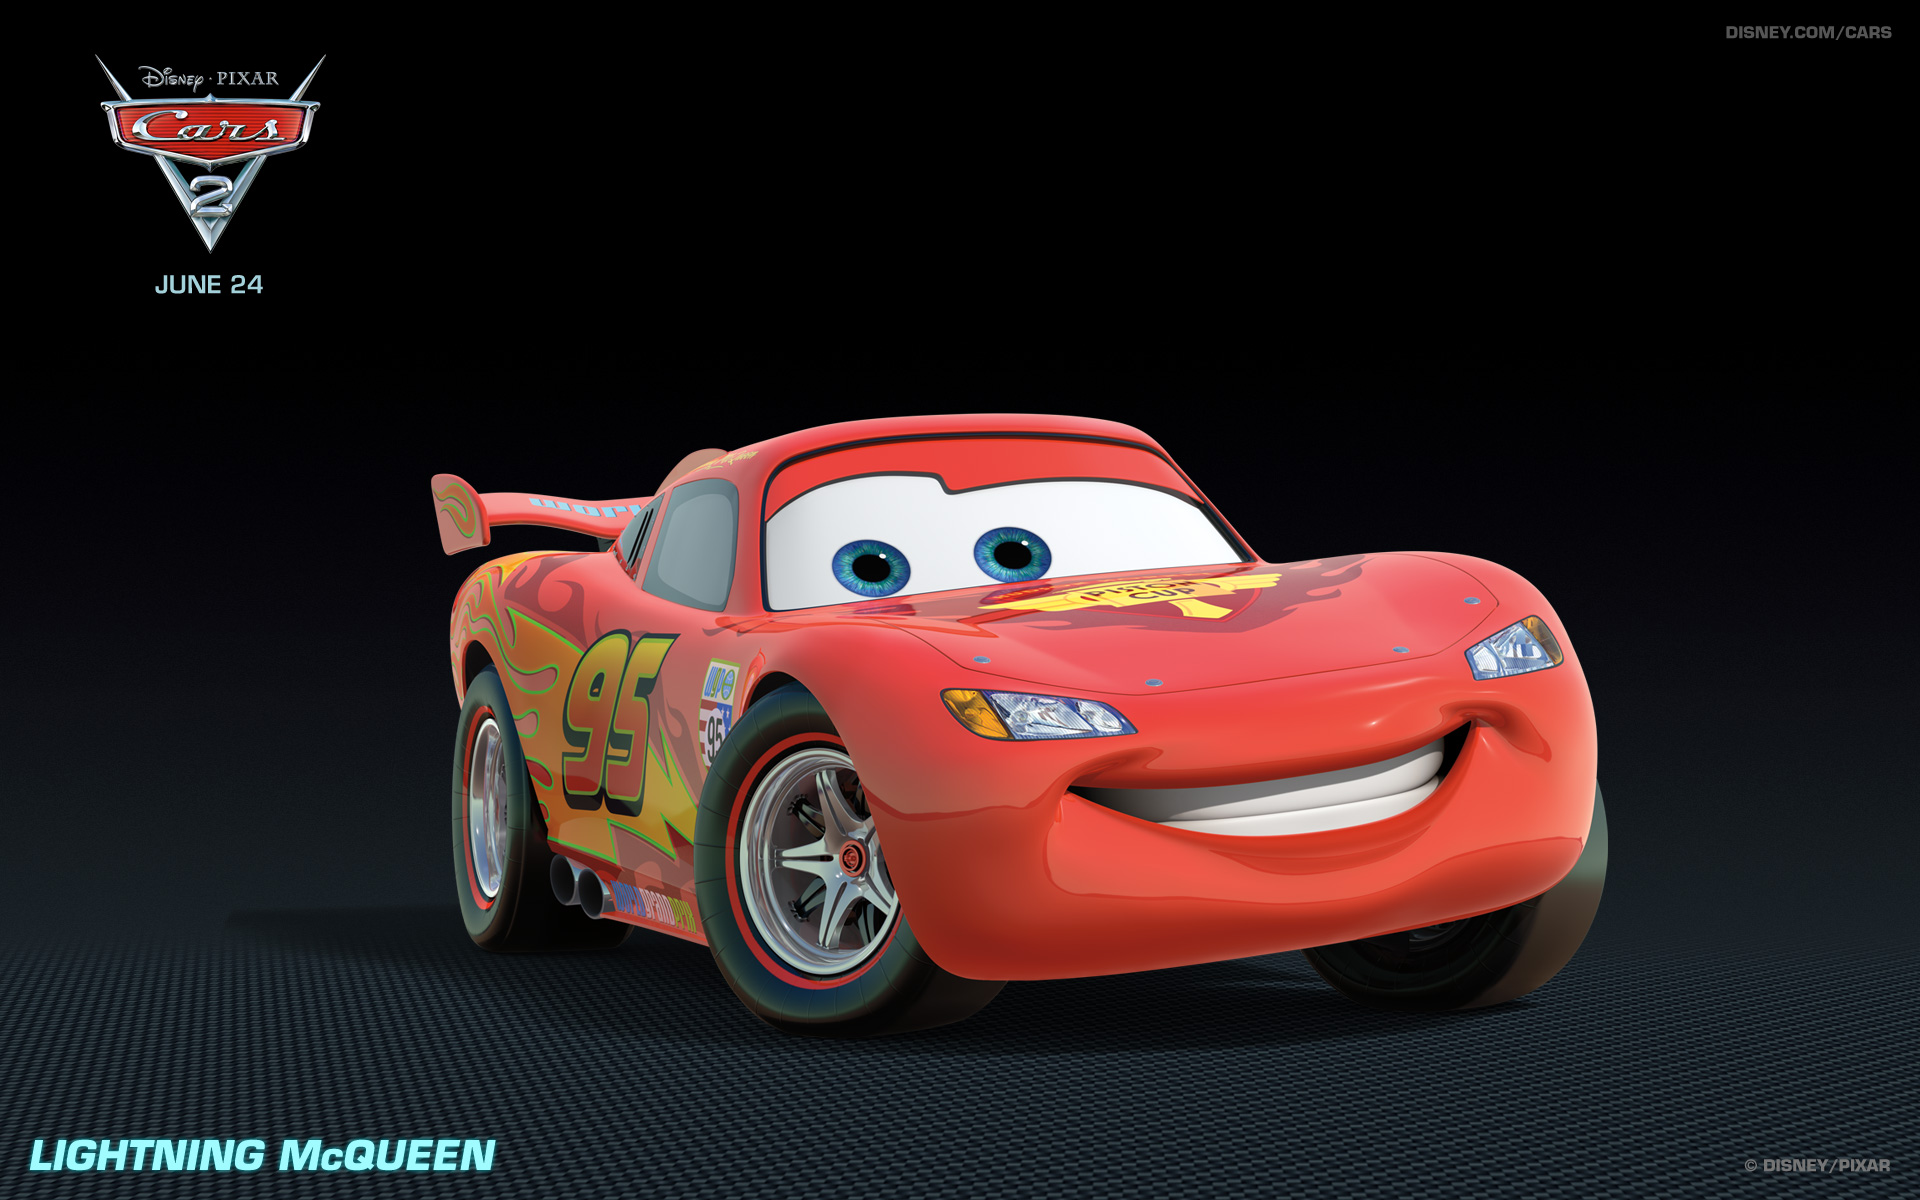 Lightning McQueen the Race Car from Disney’s Cars 2 HD Wallpaper.